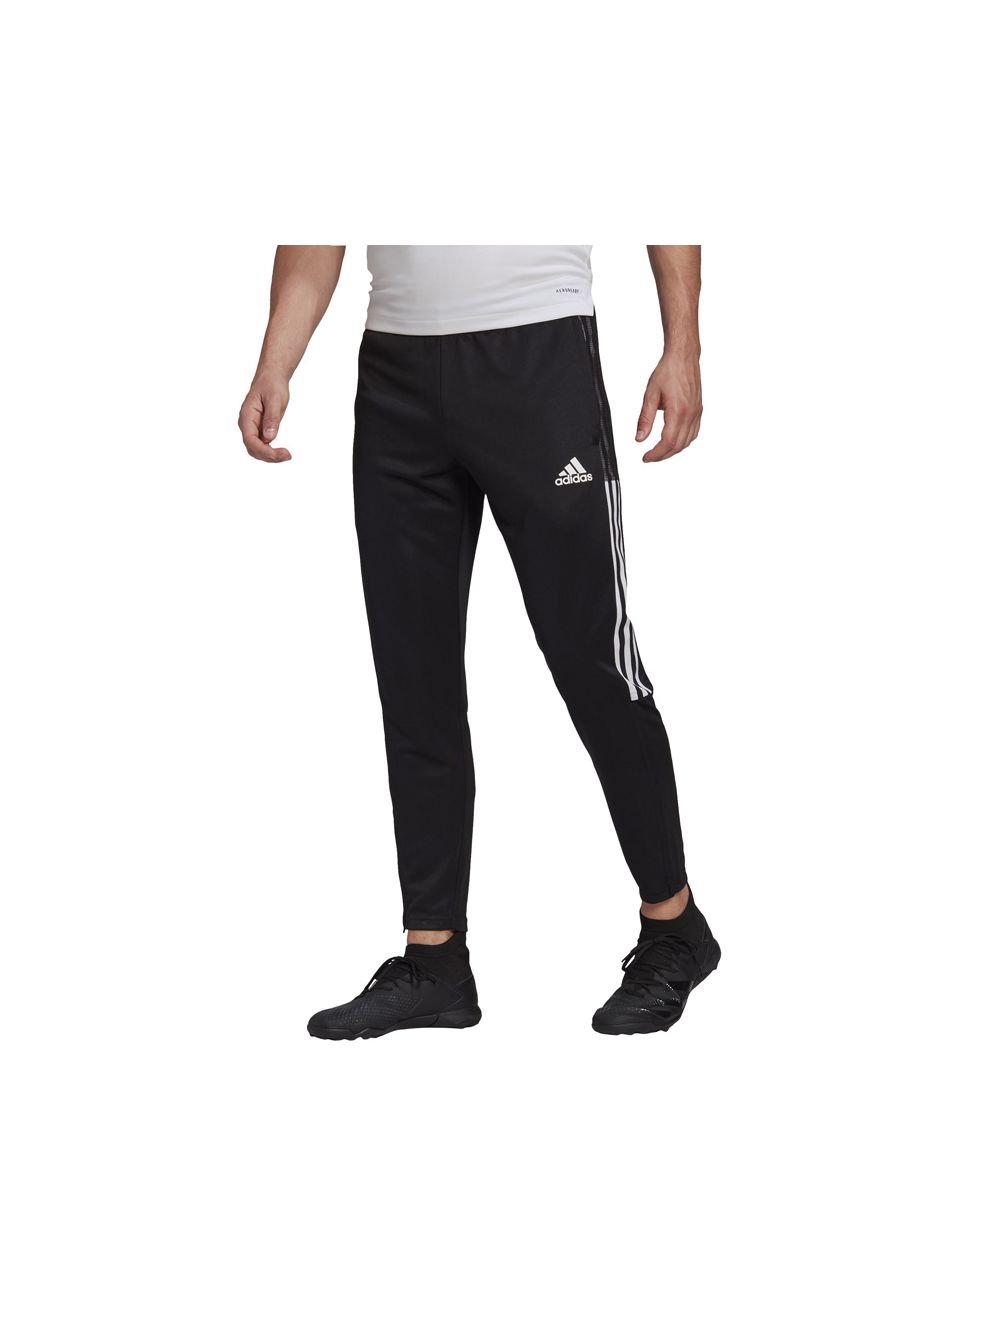 adidas Women's Tiro 21 Track Pants, Black/White, Medium : :  Clothing, Shoes & Accessories